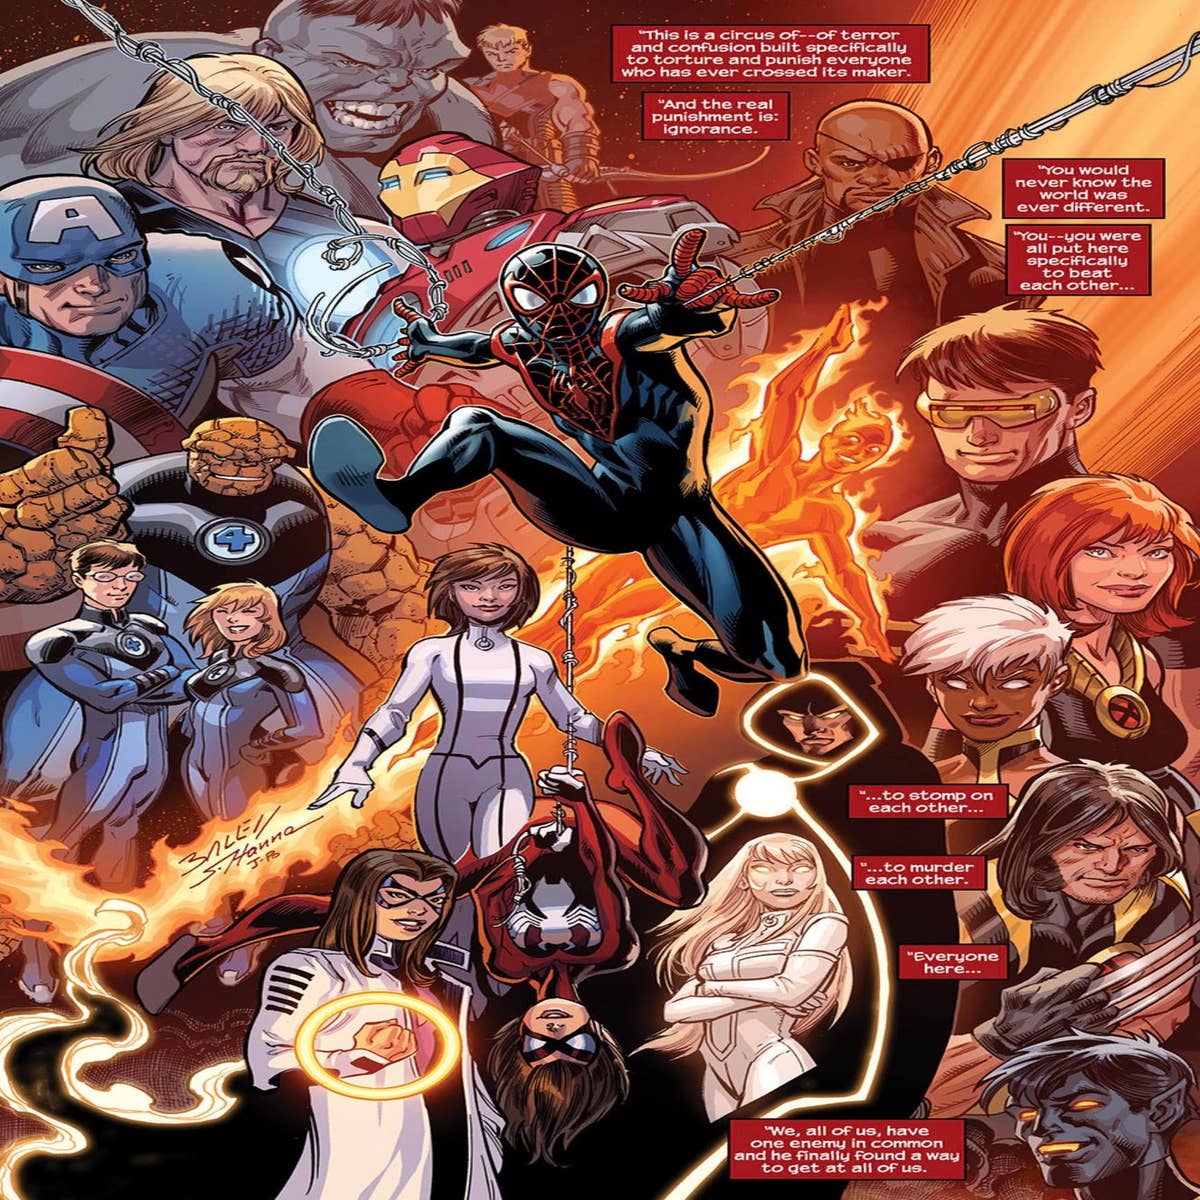 Avengers: Secret Wars Won't Be Based on the Original Comic Series